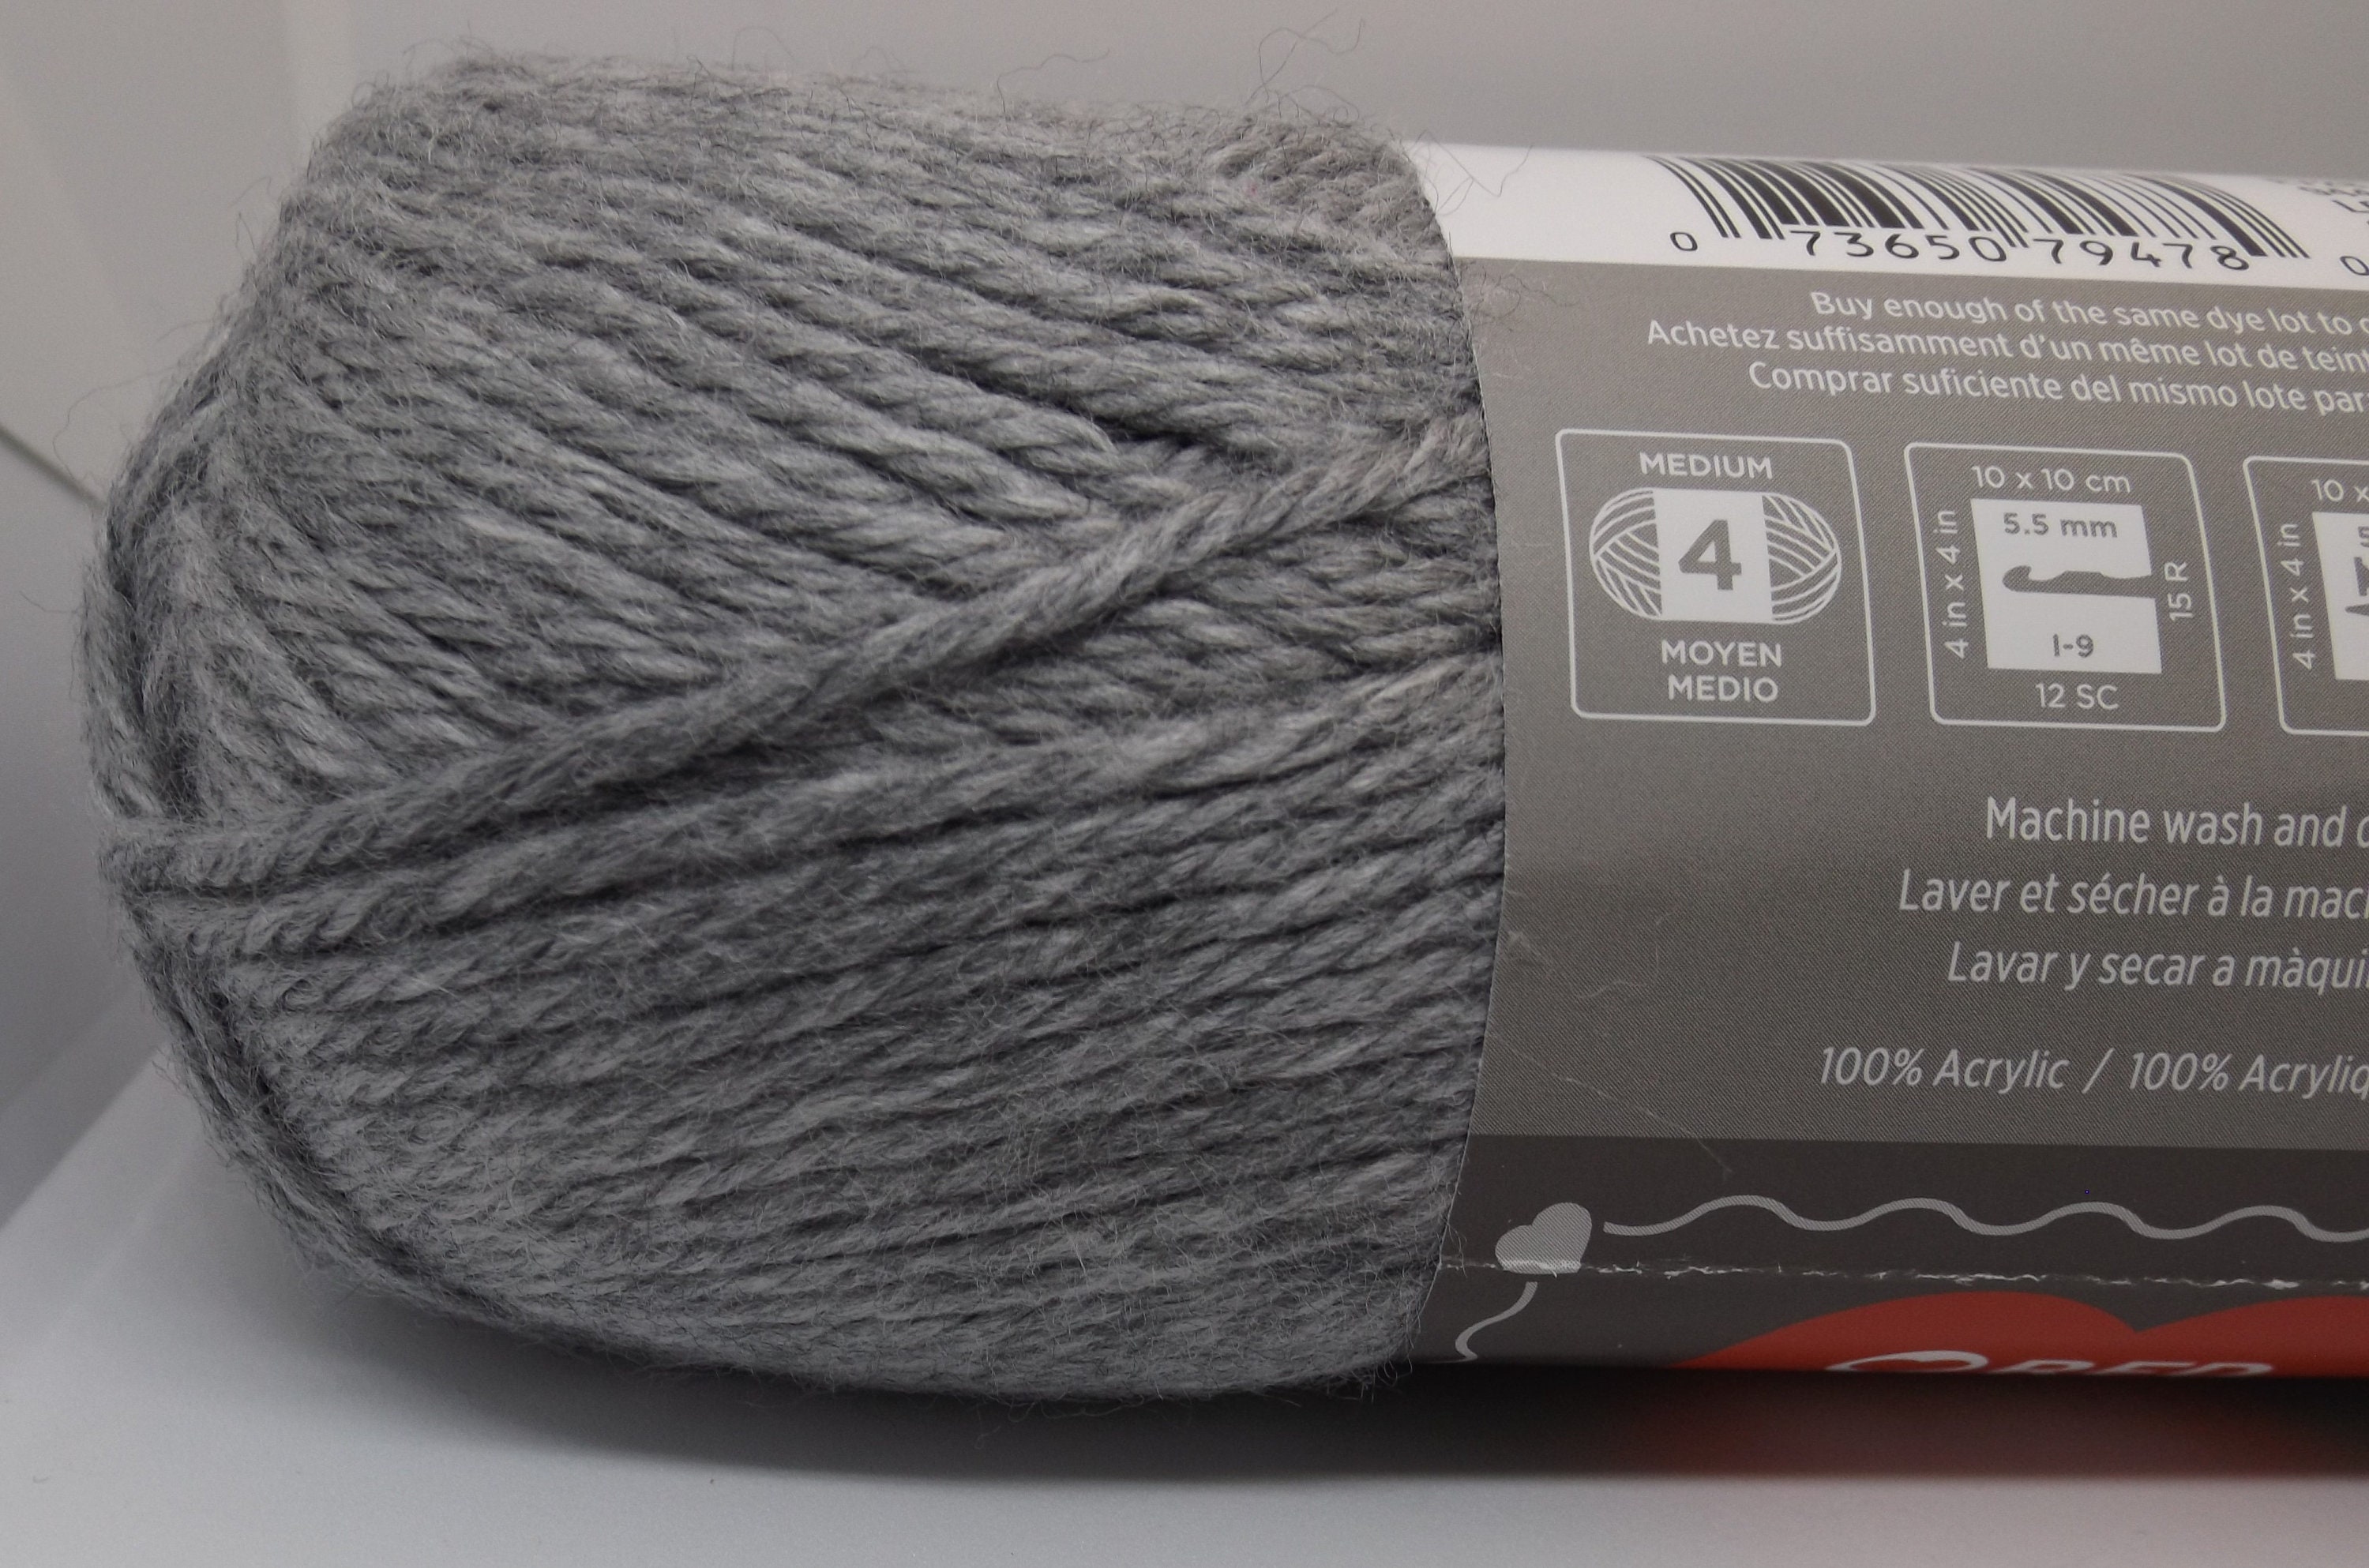 Red Heart Soft Black Yarn - 3 Pack of 141g/5oz - Acrylic - 4 Medium (Worsted) - 256 Yards - Knitting, Crocheting & Crafts